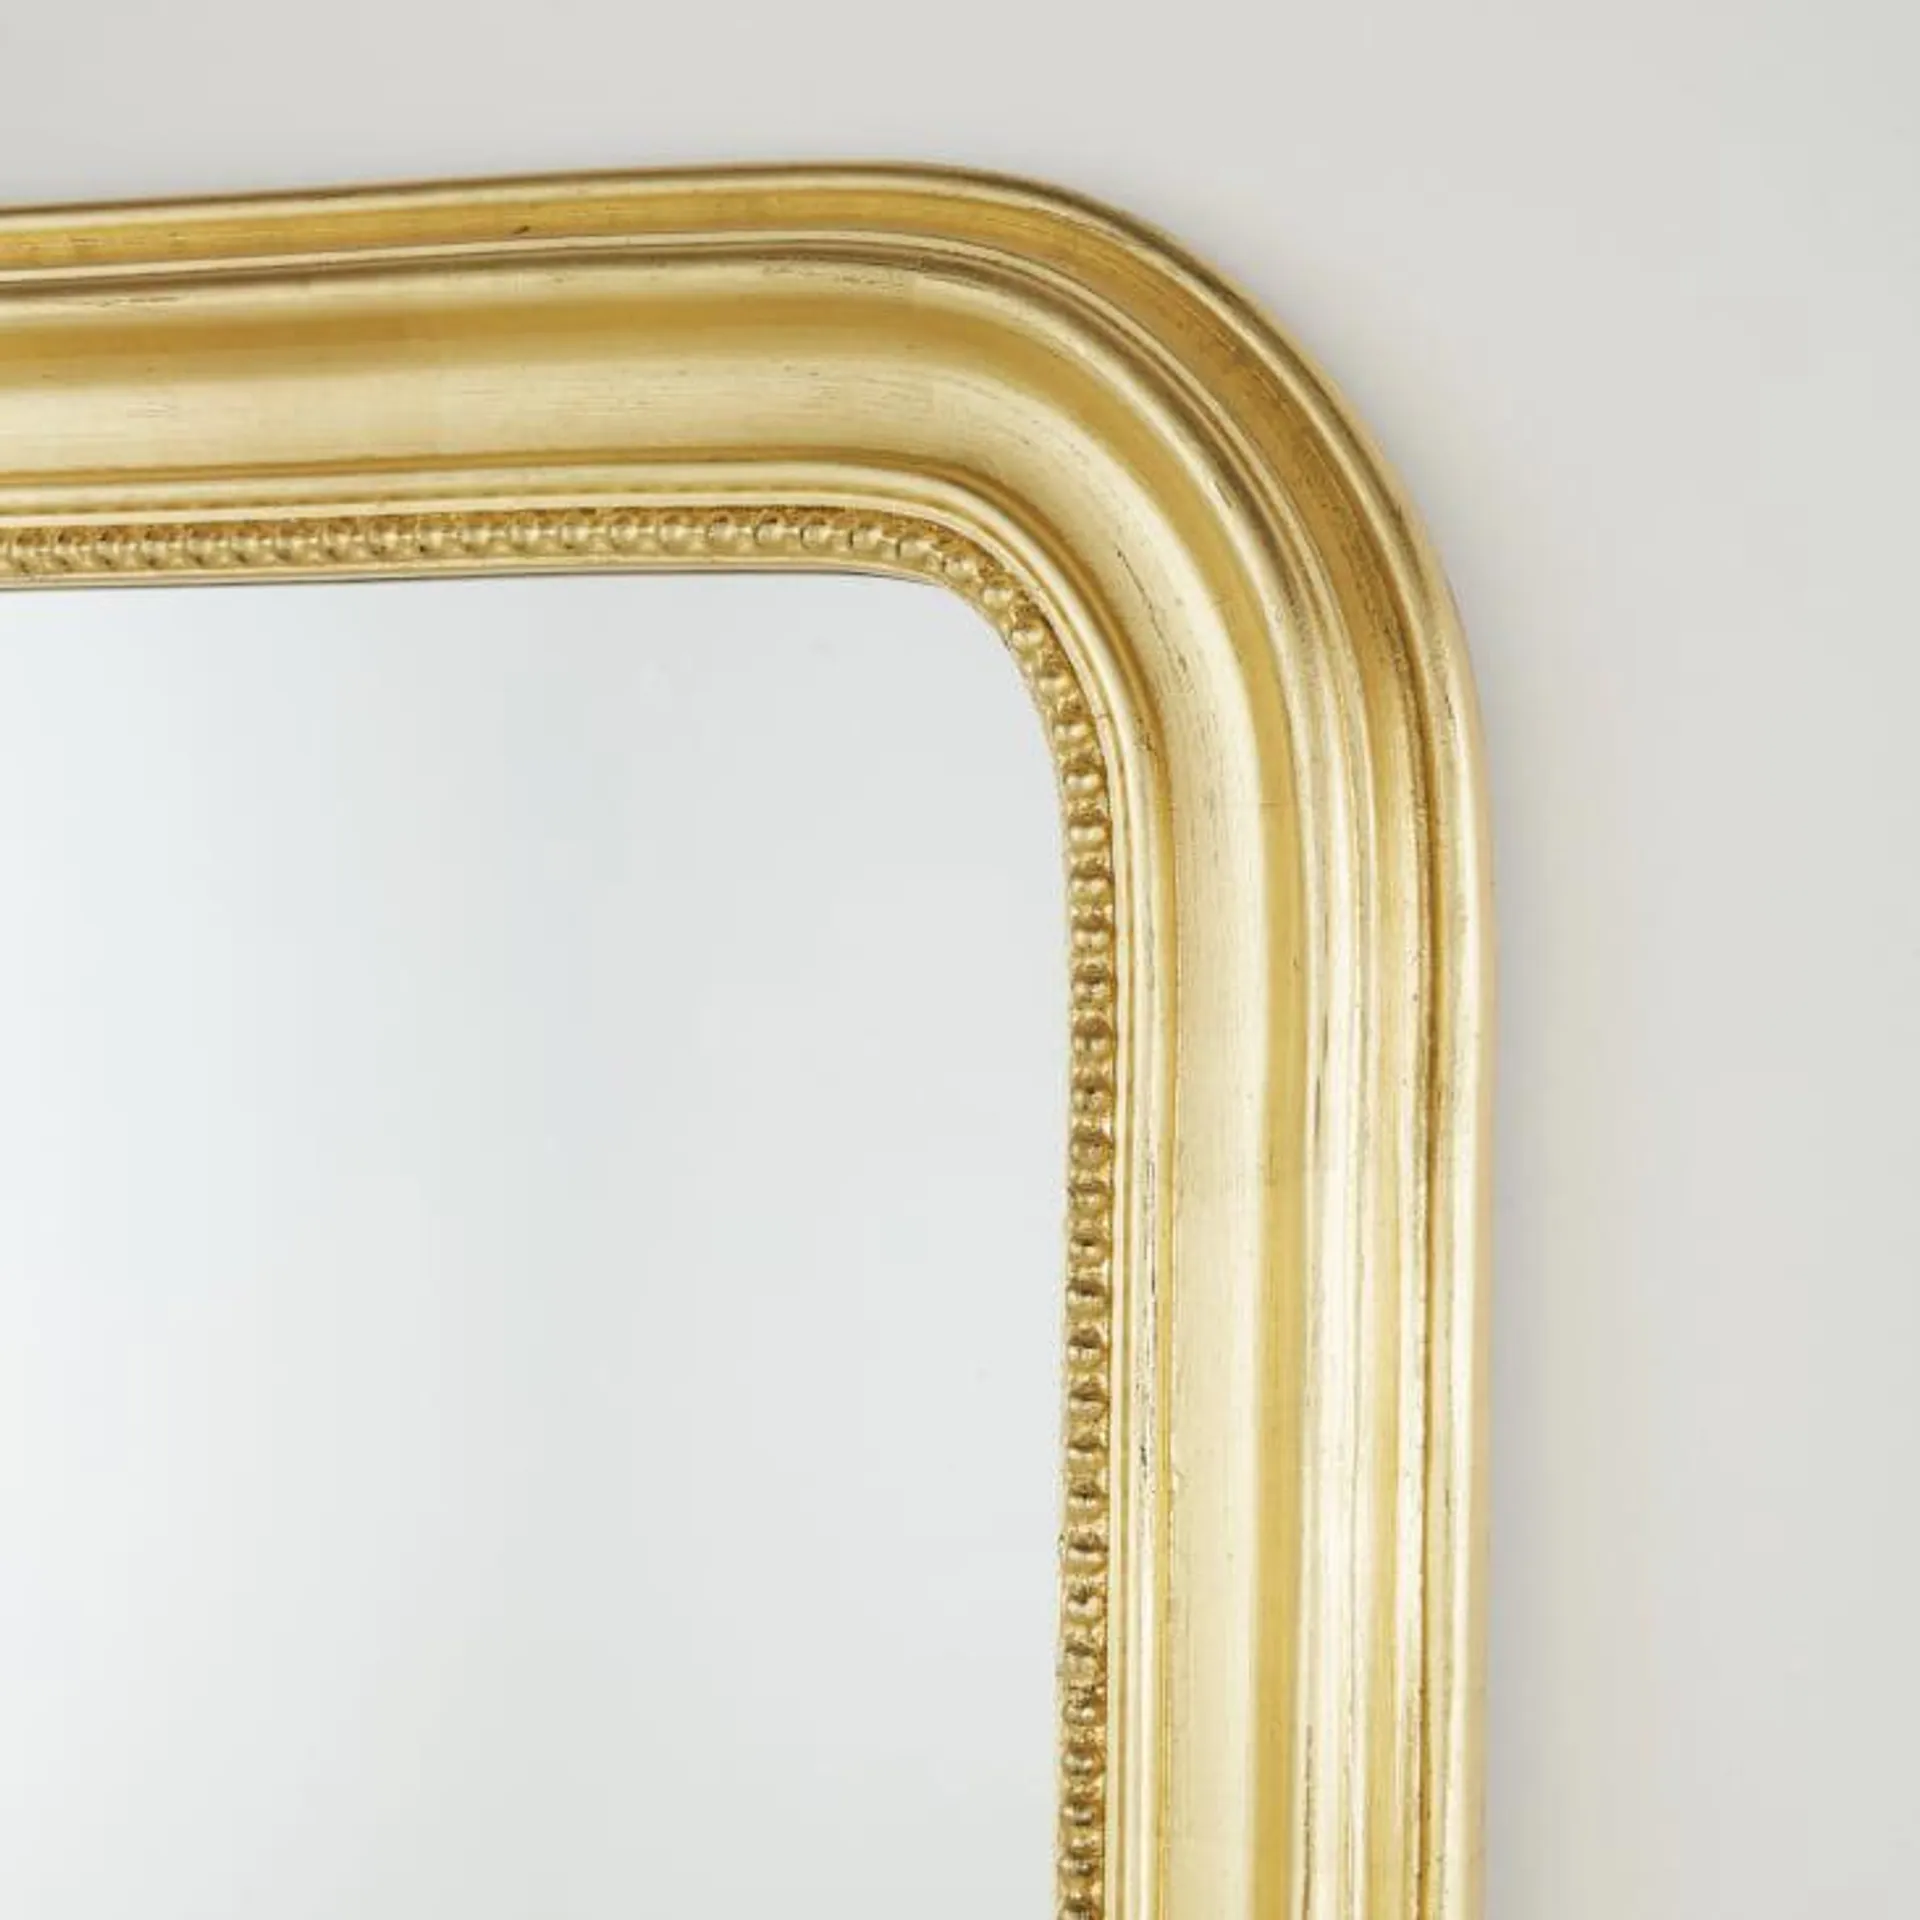 Espejo rectangular grande con molduras doradas 61 x 160